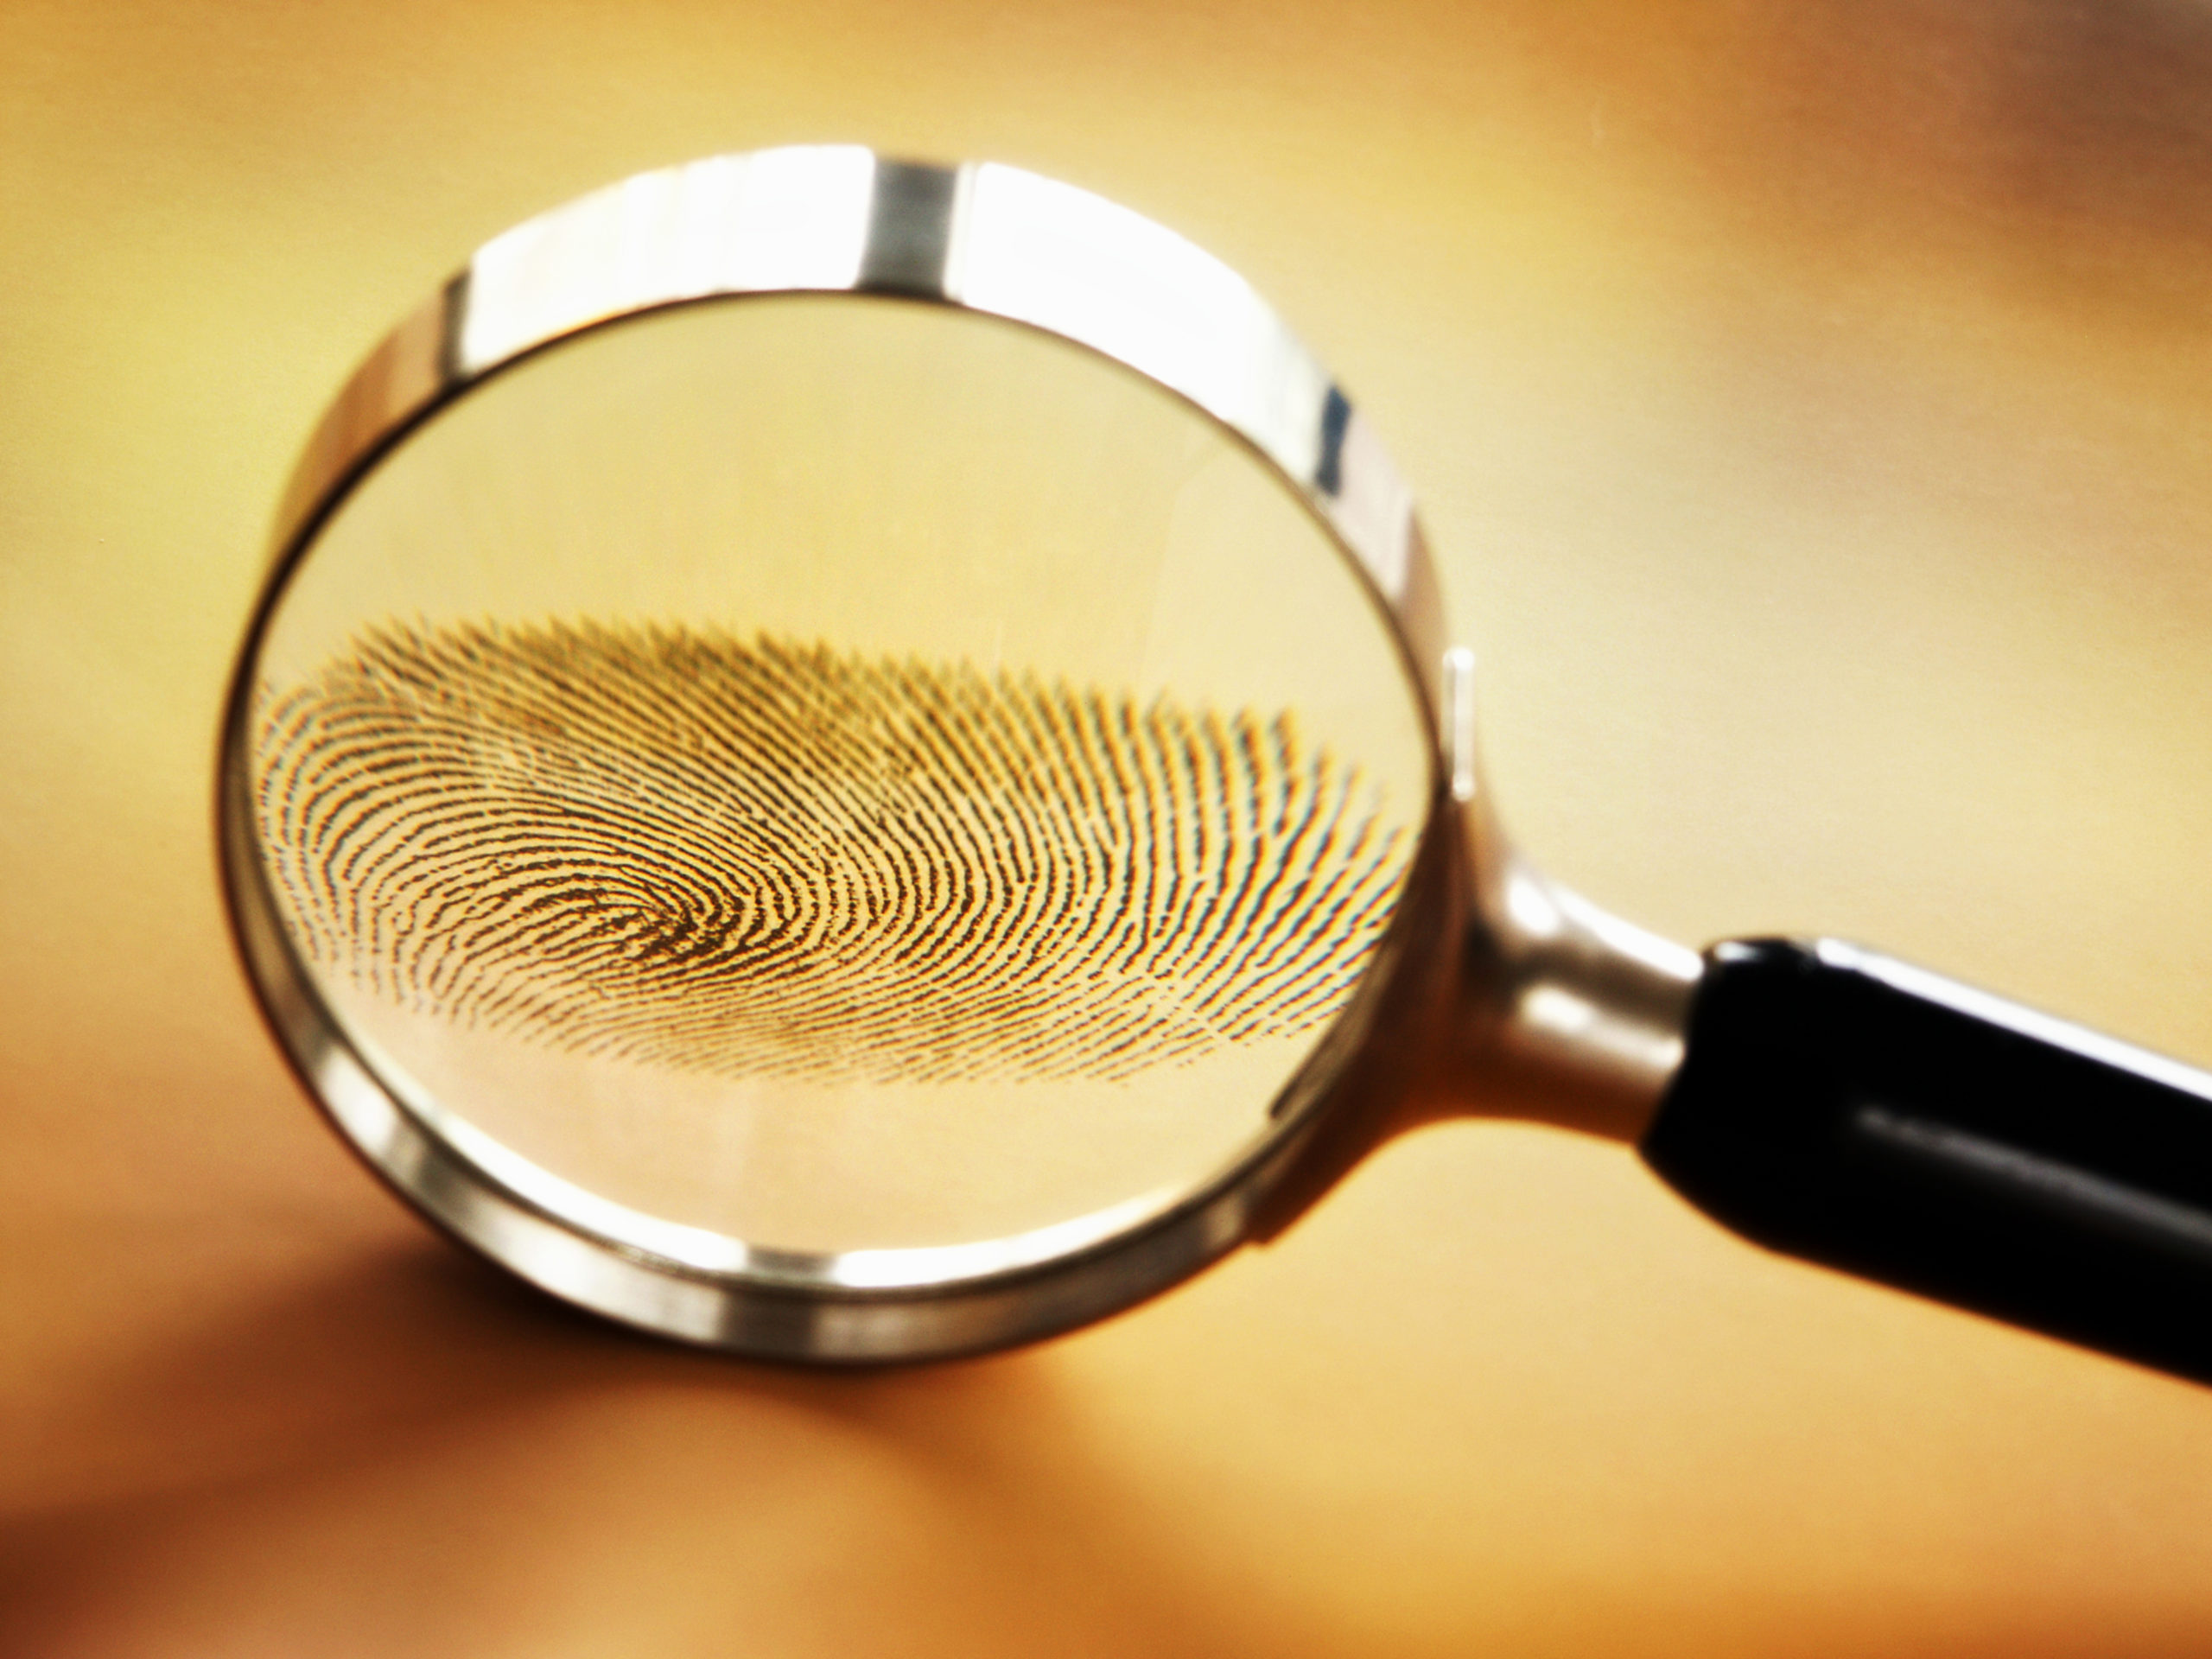 Magnifying glass and fingerprint